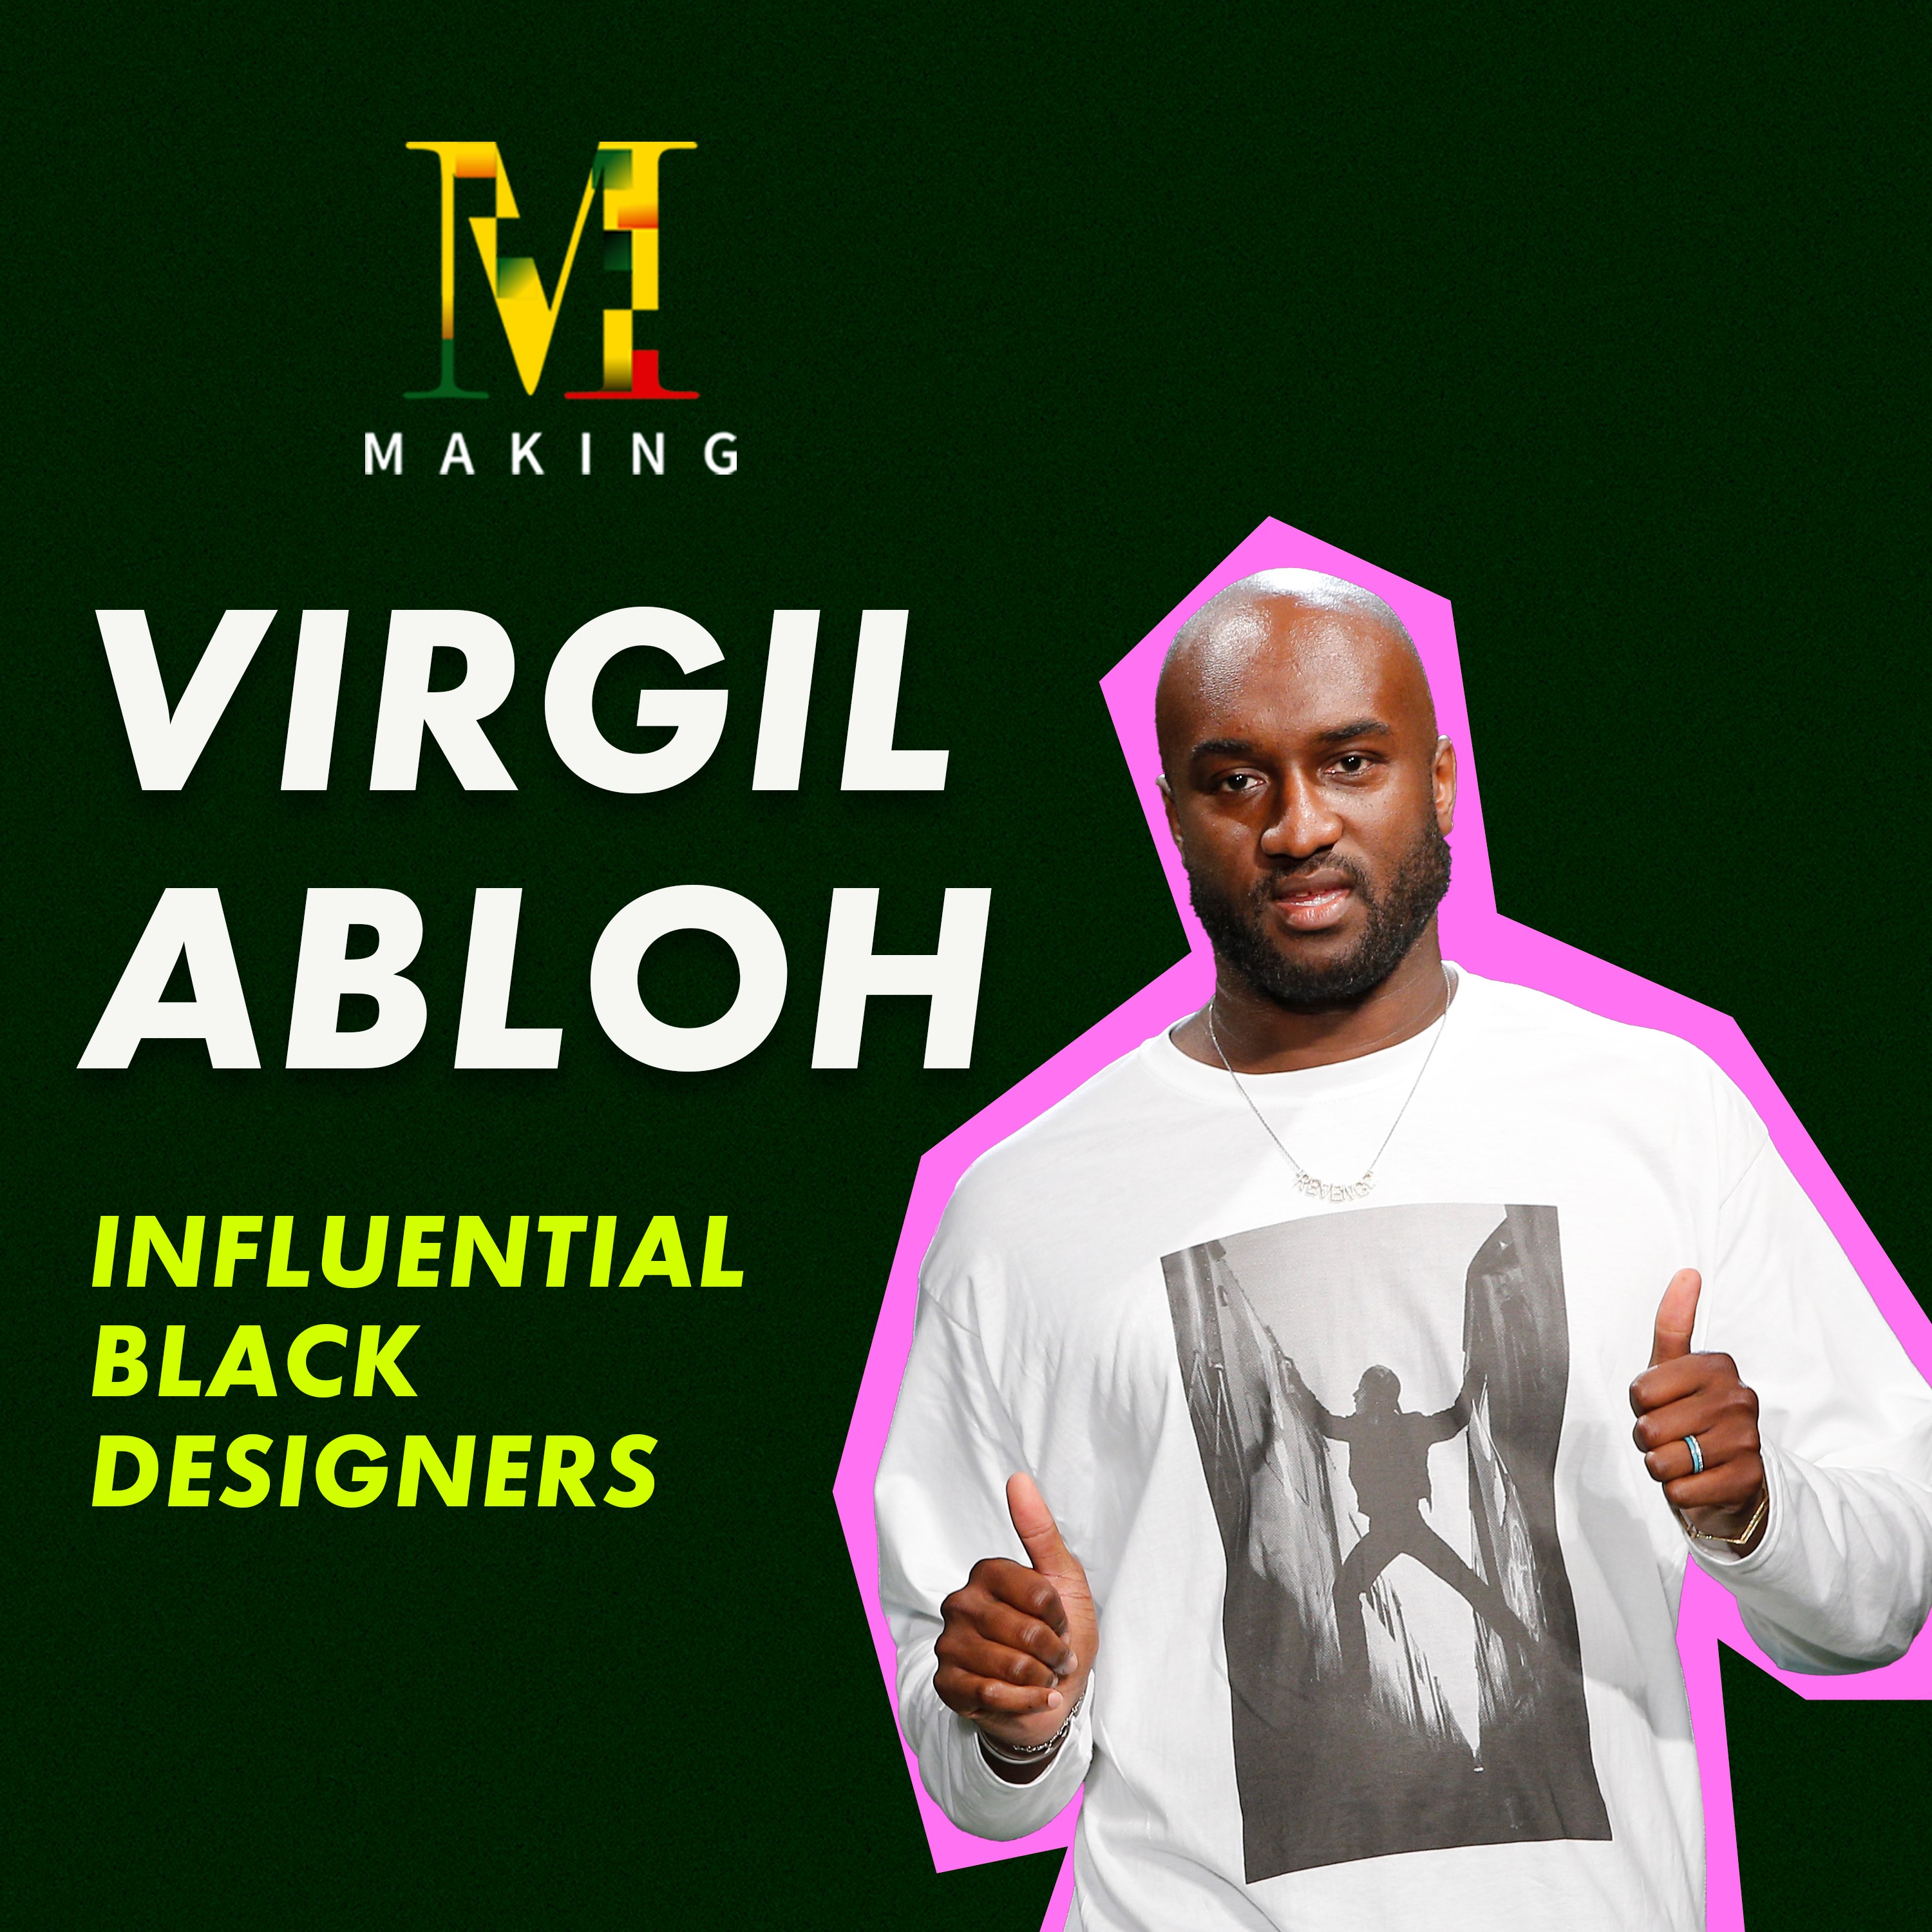 Long Live Virgil, Tops, Long Live Virgil Tshirt